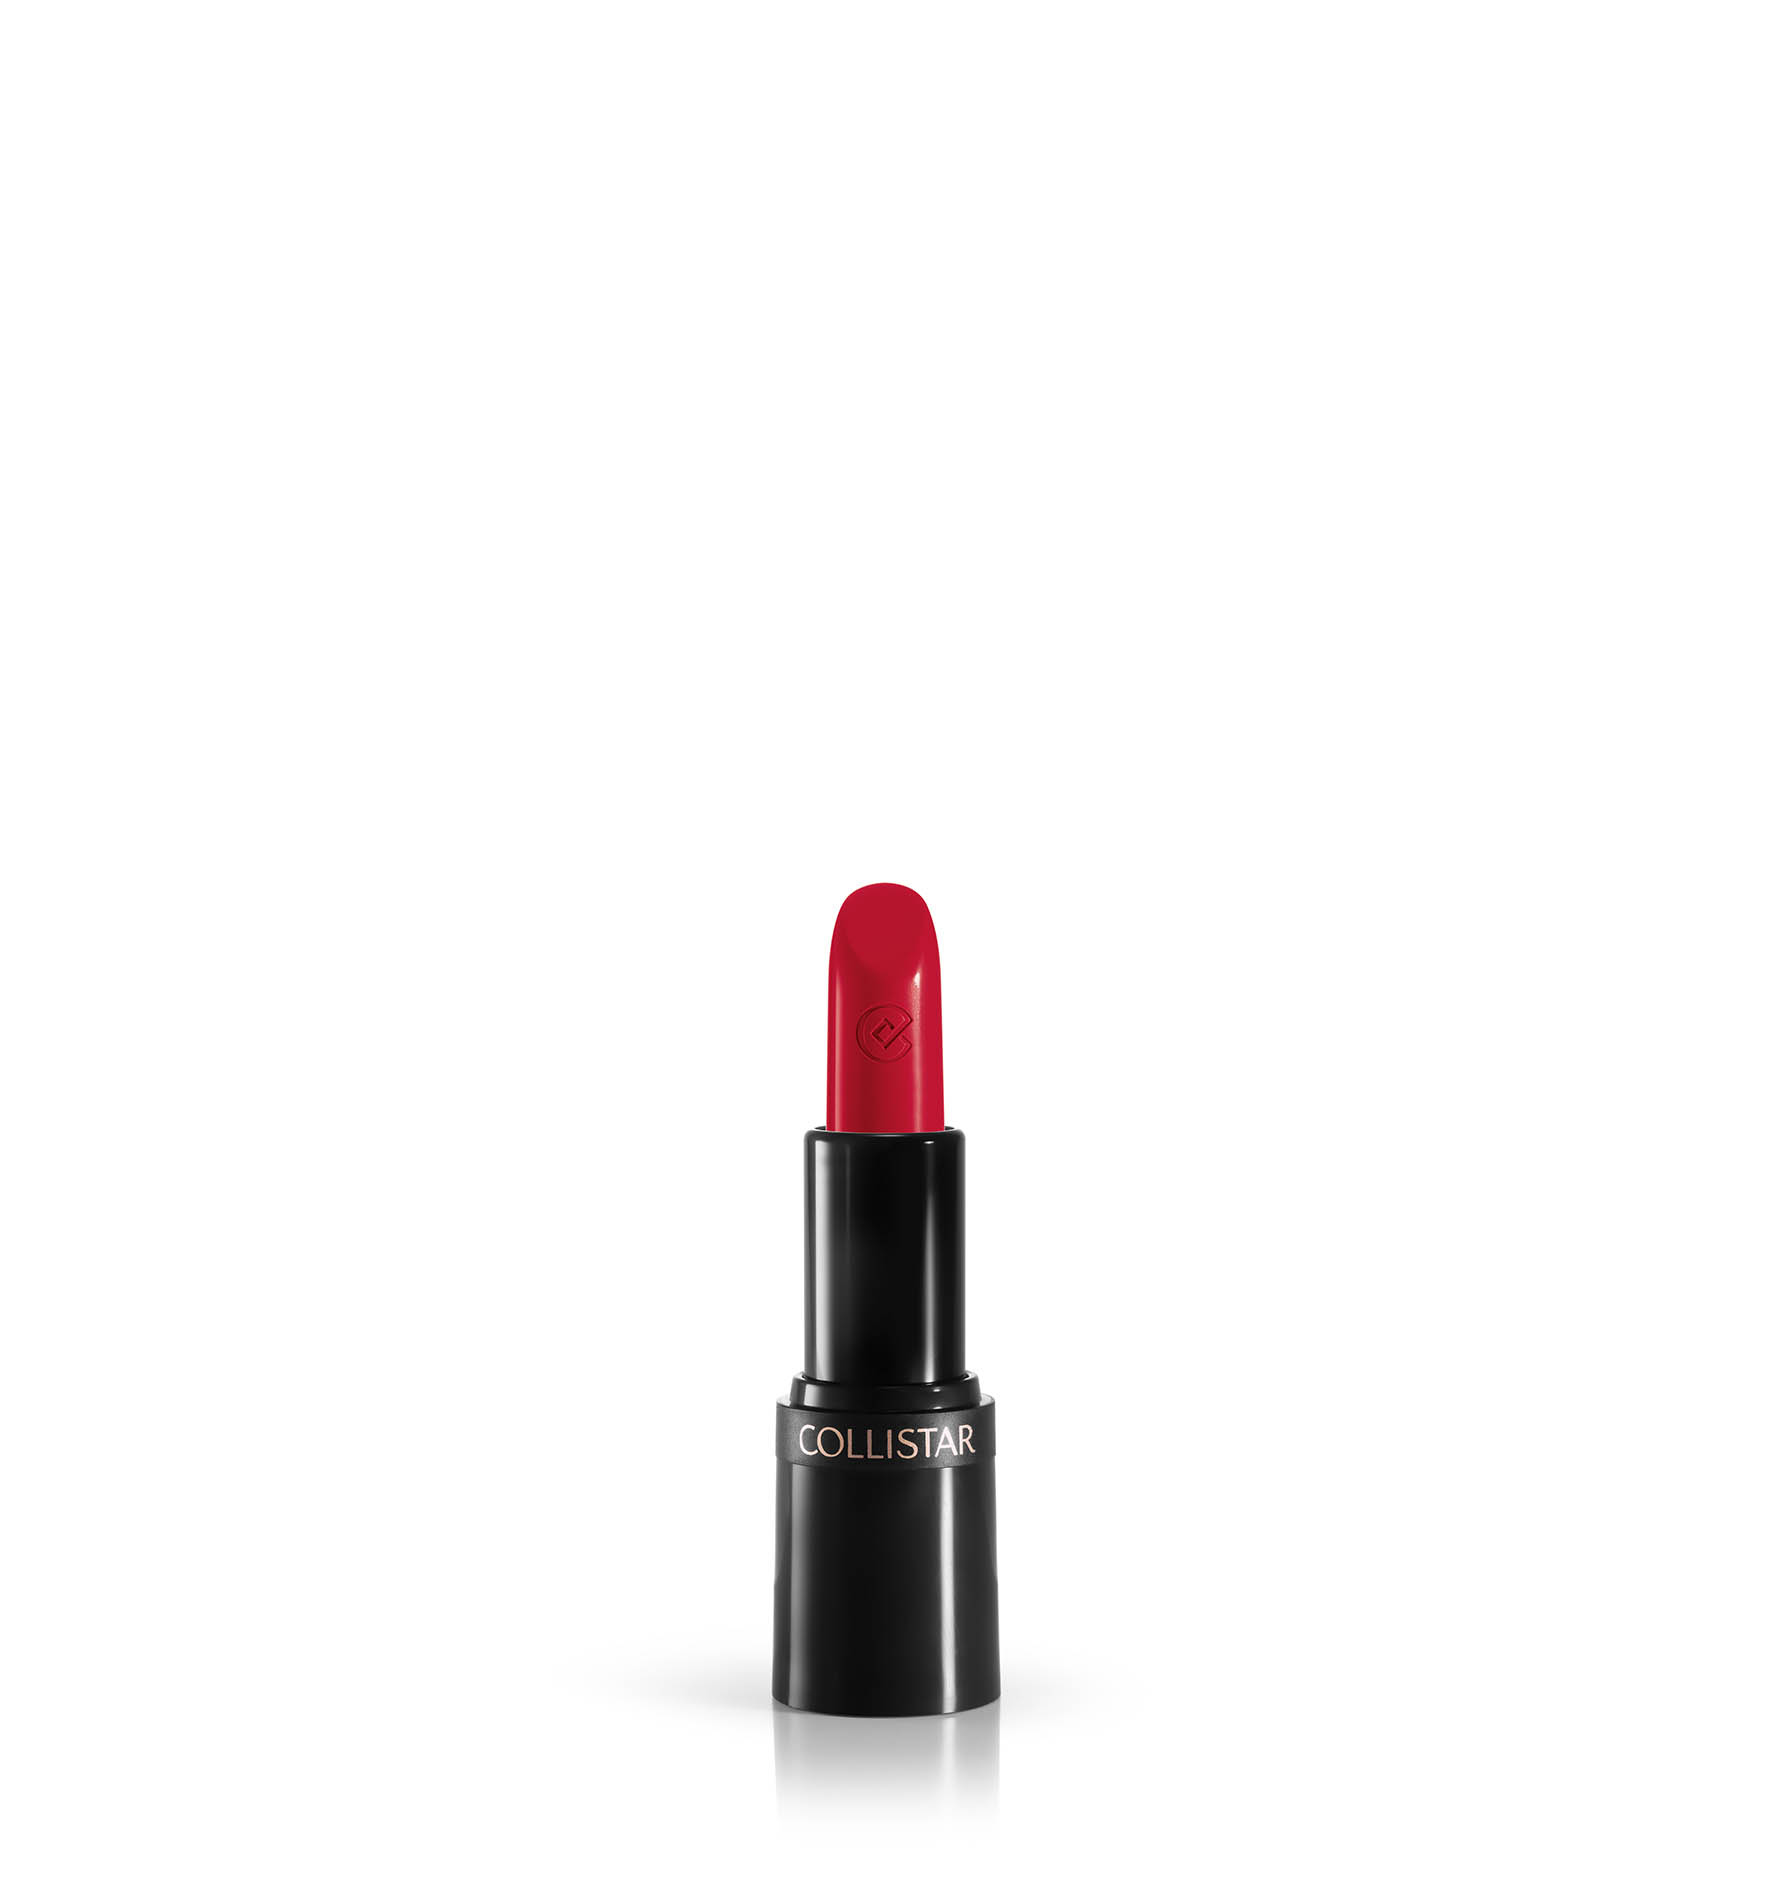 PURO LIPSTICK - Lipstick | Collistar - Shop Online Ufficiale